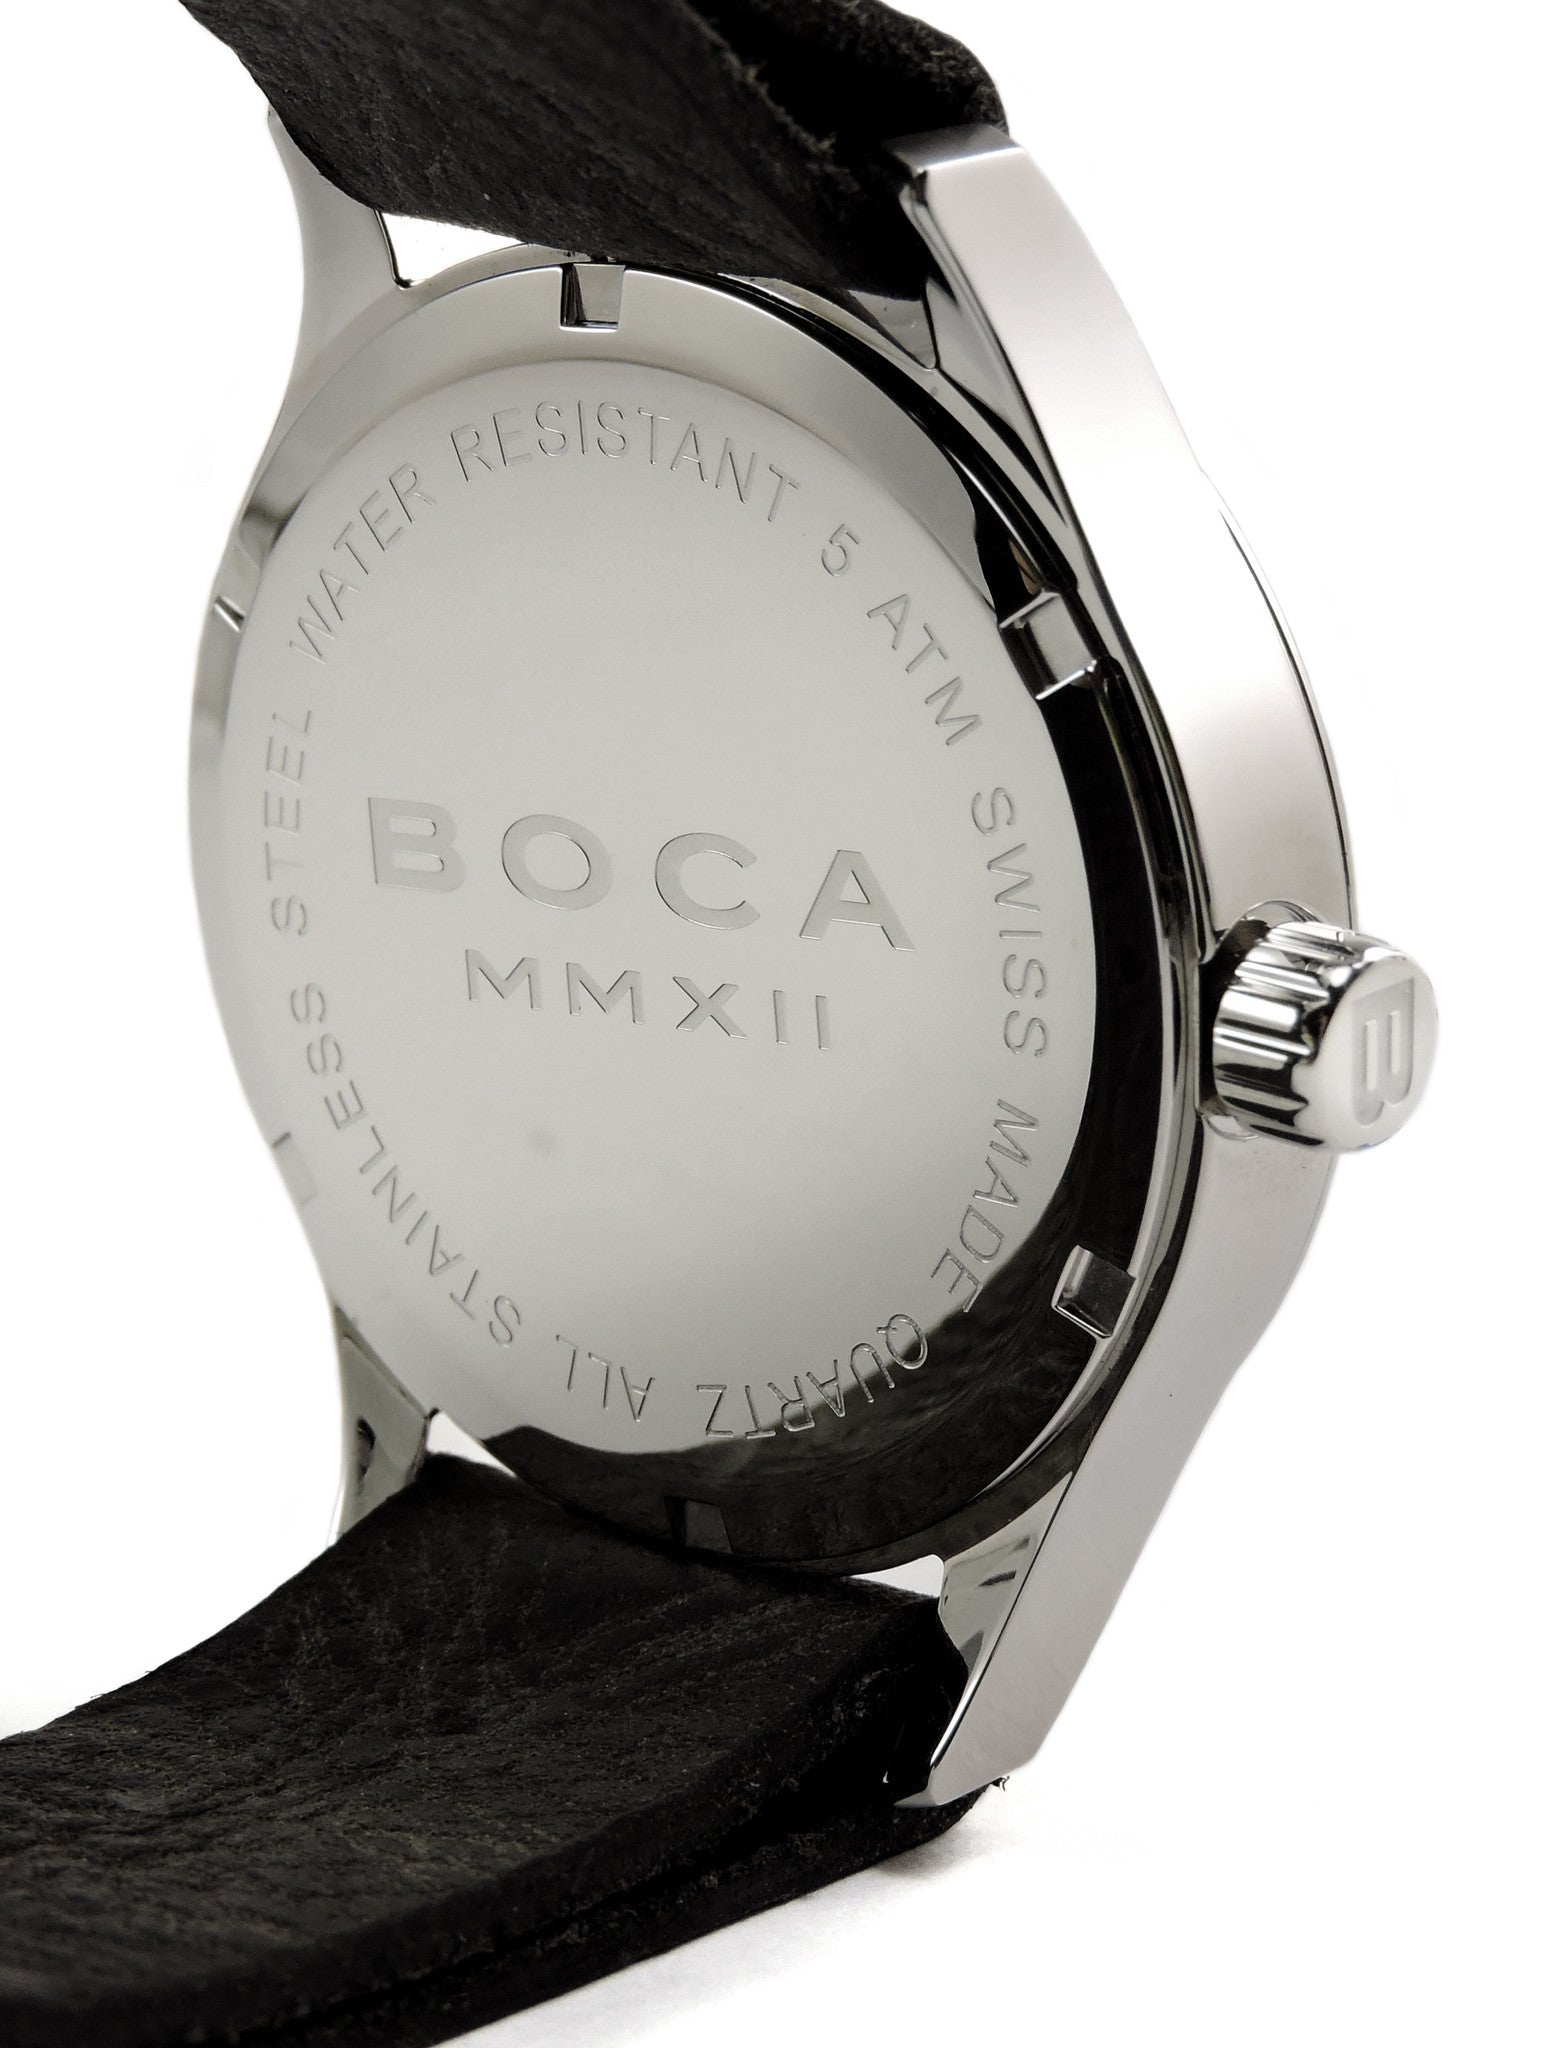 Primero Black - Olive Wristband - BOCA MMXII - Official website